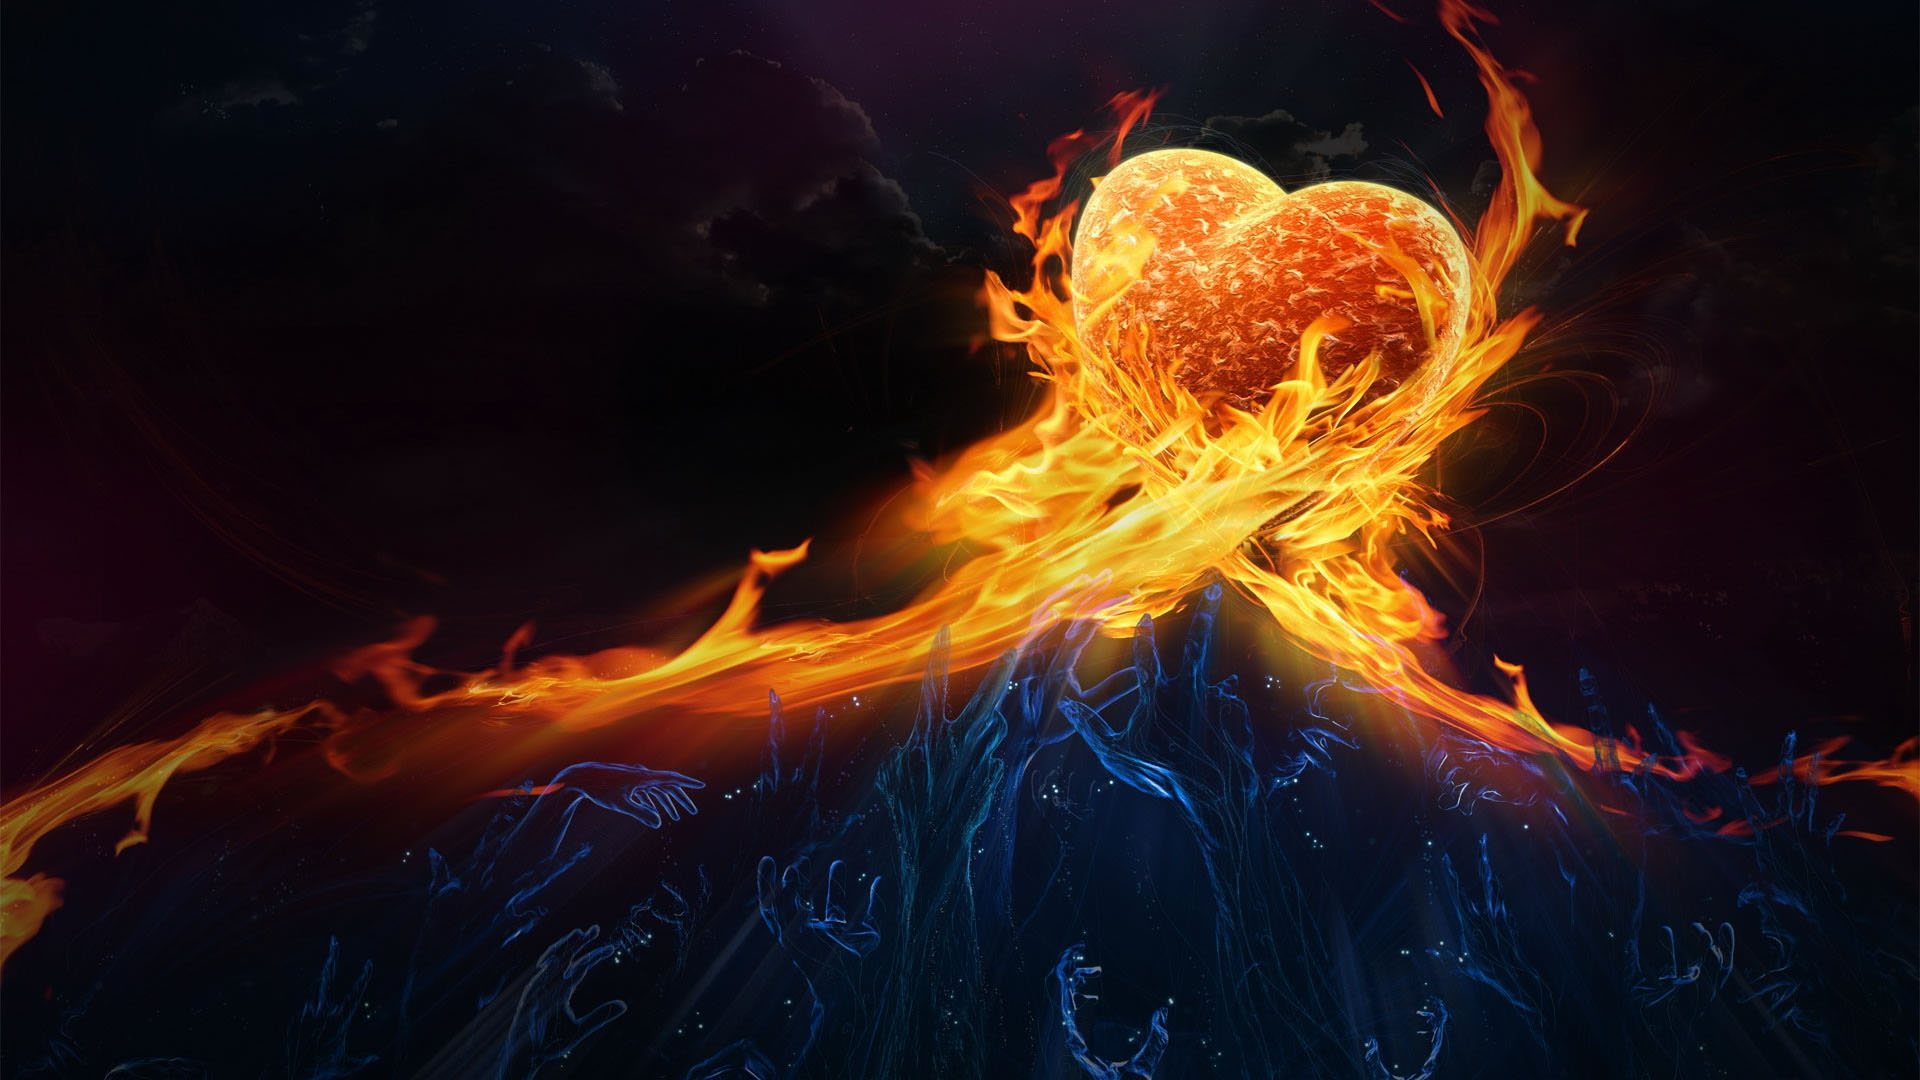 Fire Heart wallpaper by __DrAg0N__ - Download on ZEDGE™ | 2d65